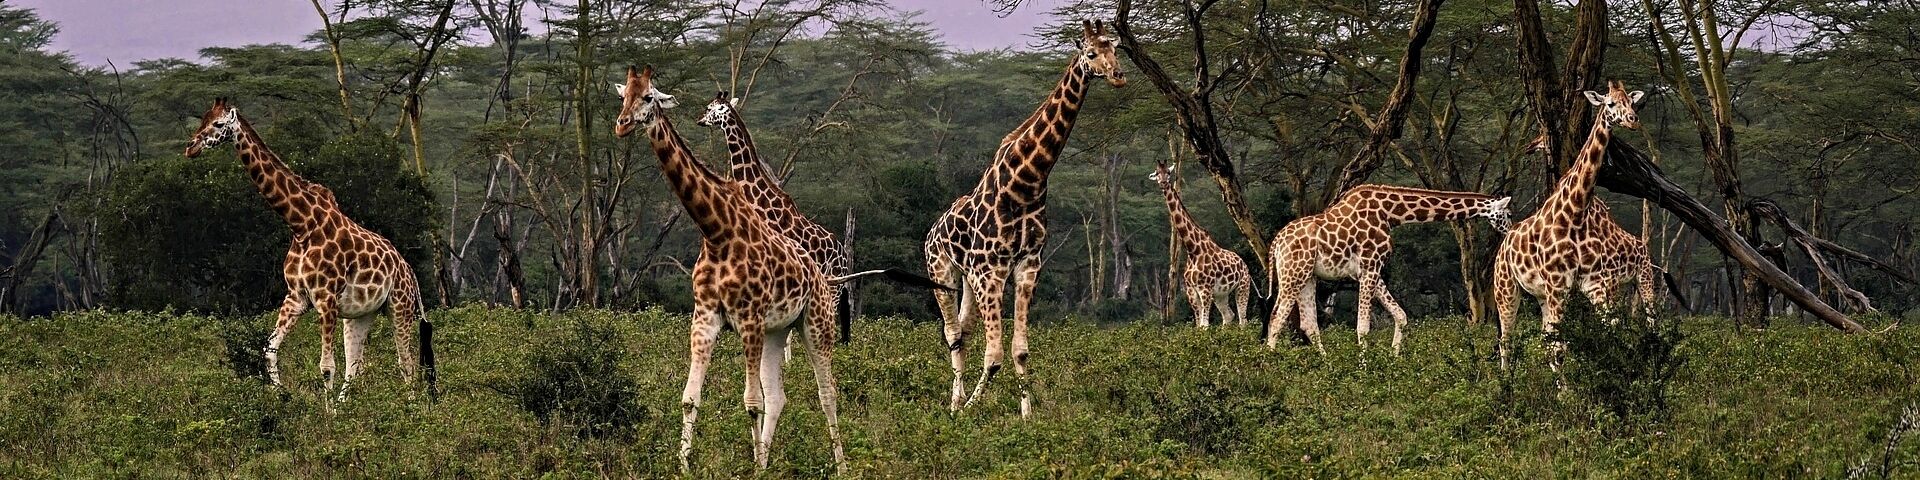 Thornicroft Giraffes in Zambia